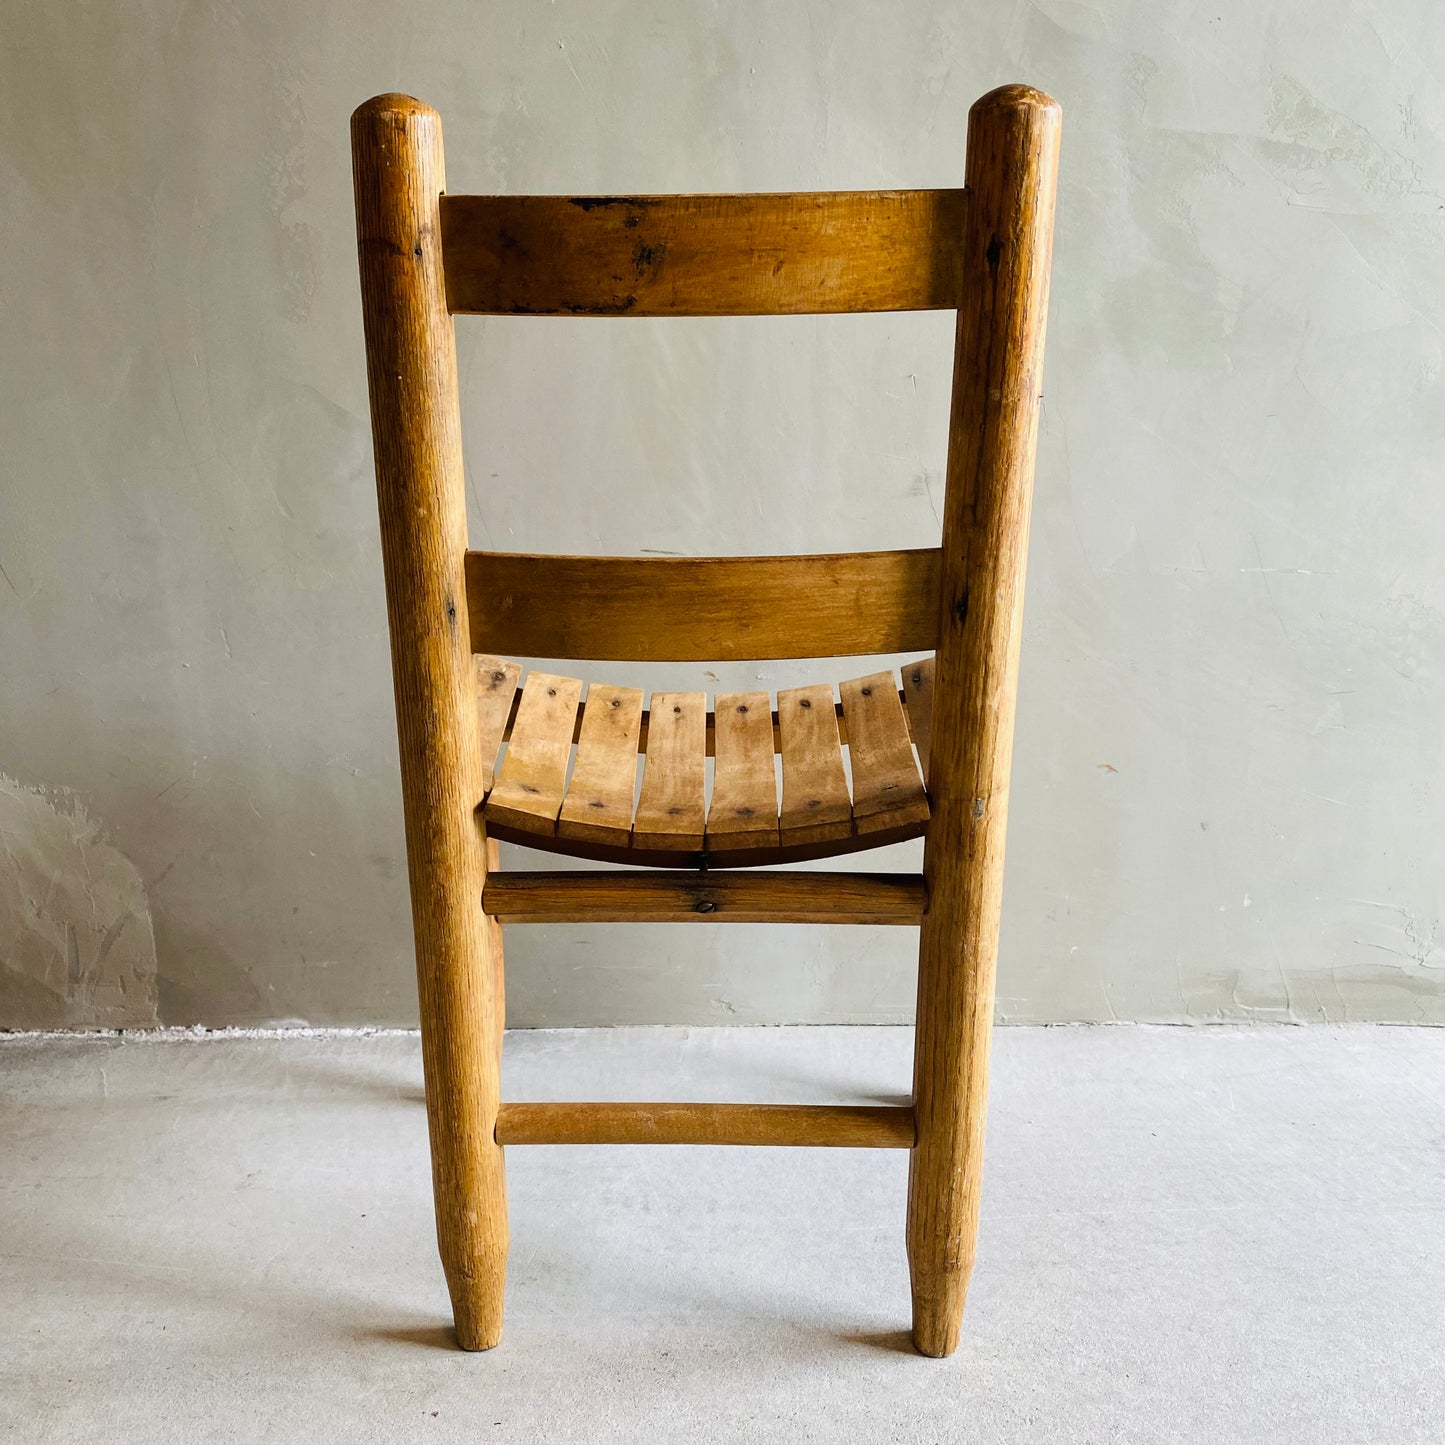 【1940s-1950s vintage】school chair